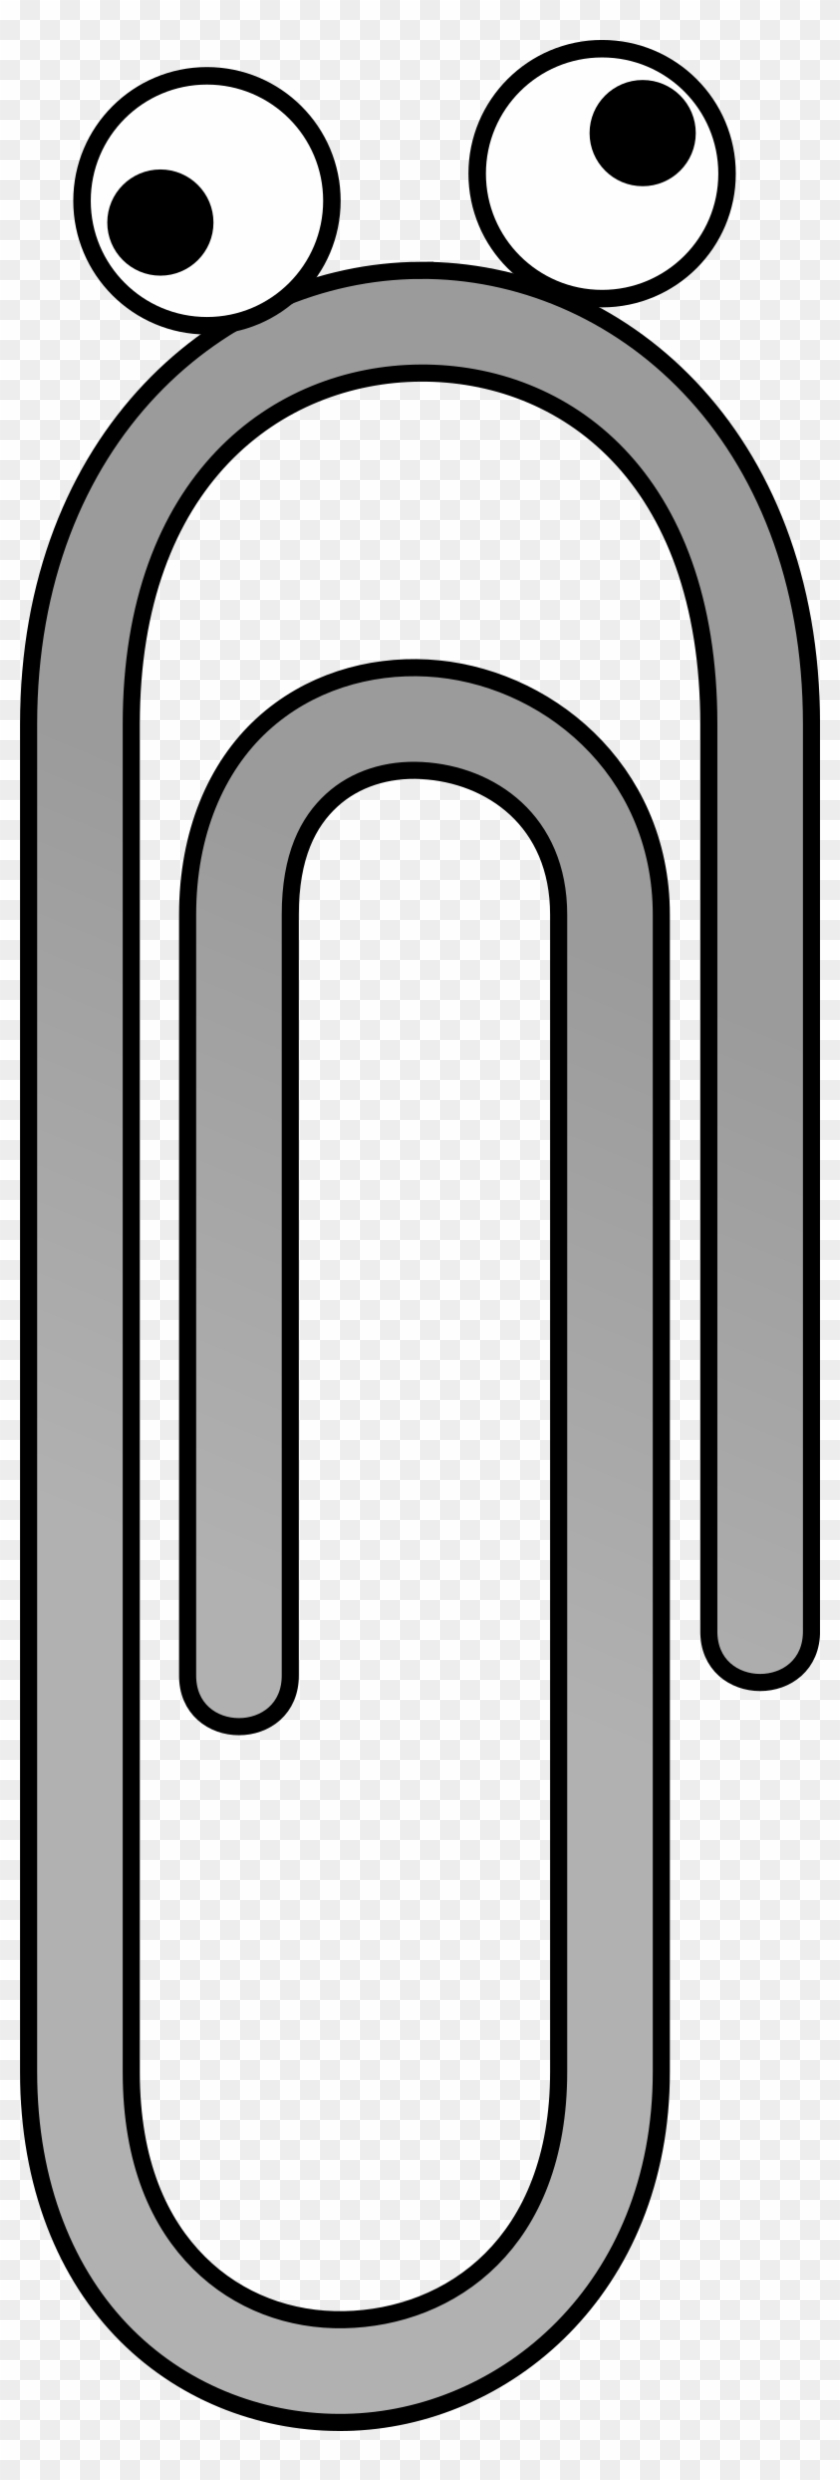 Paperclip - Paper Clip Clipart #169410